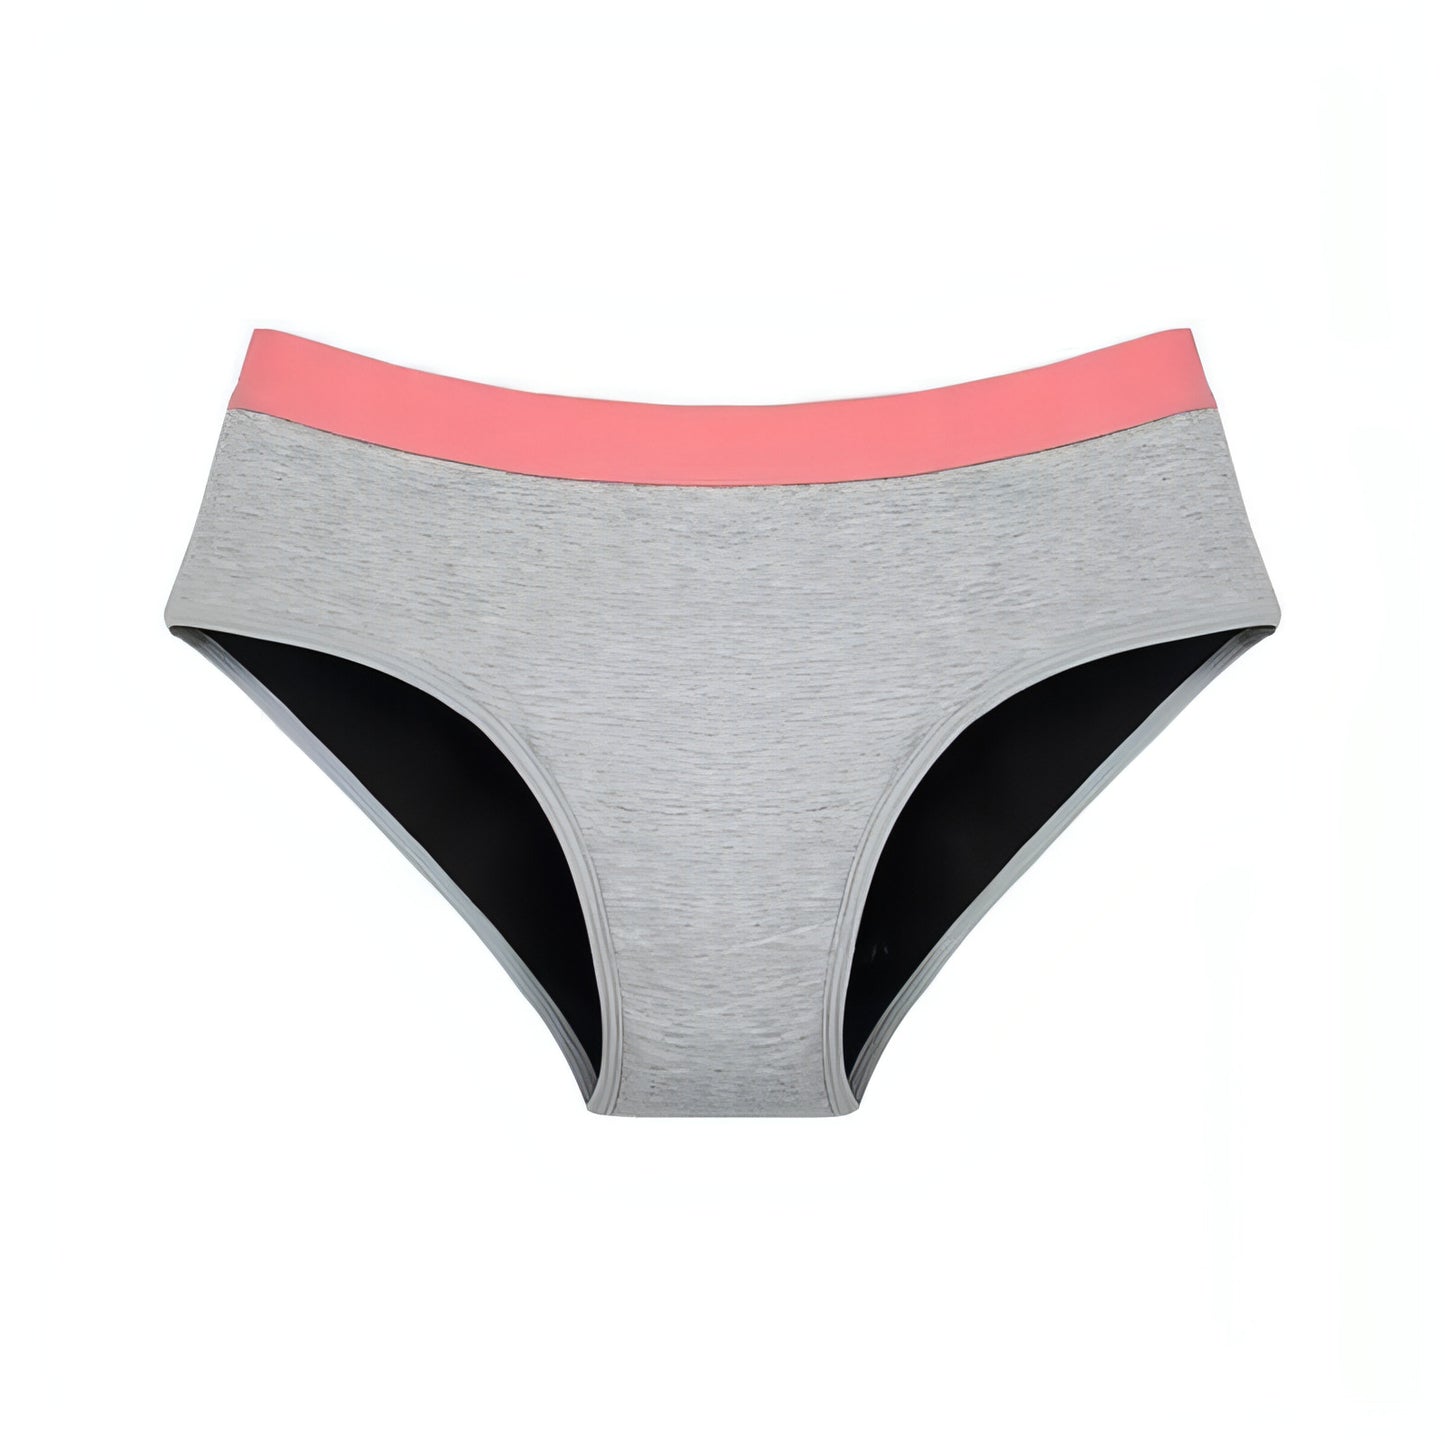 Teen Bikini - Bubble Gum Pink Period Underwear